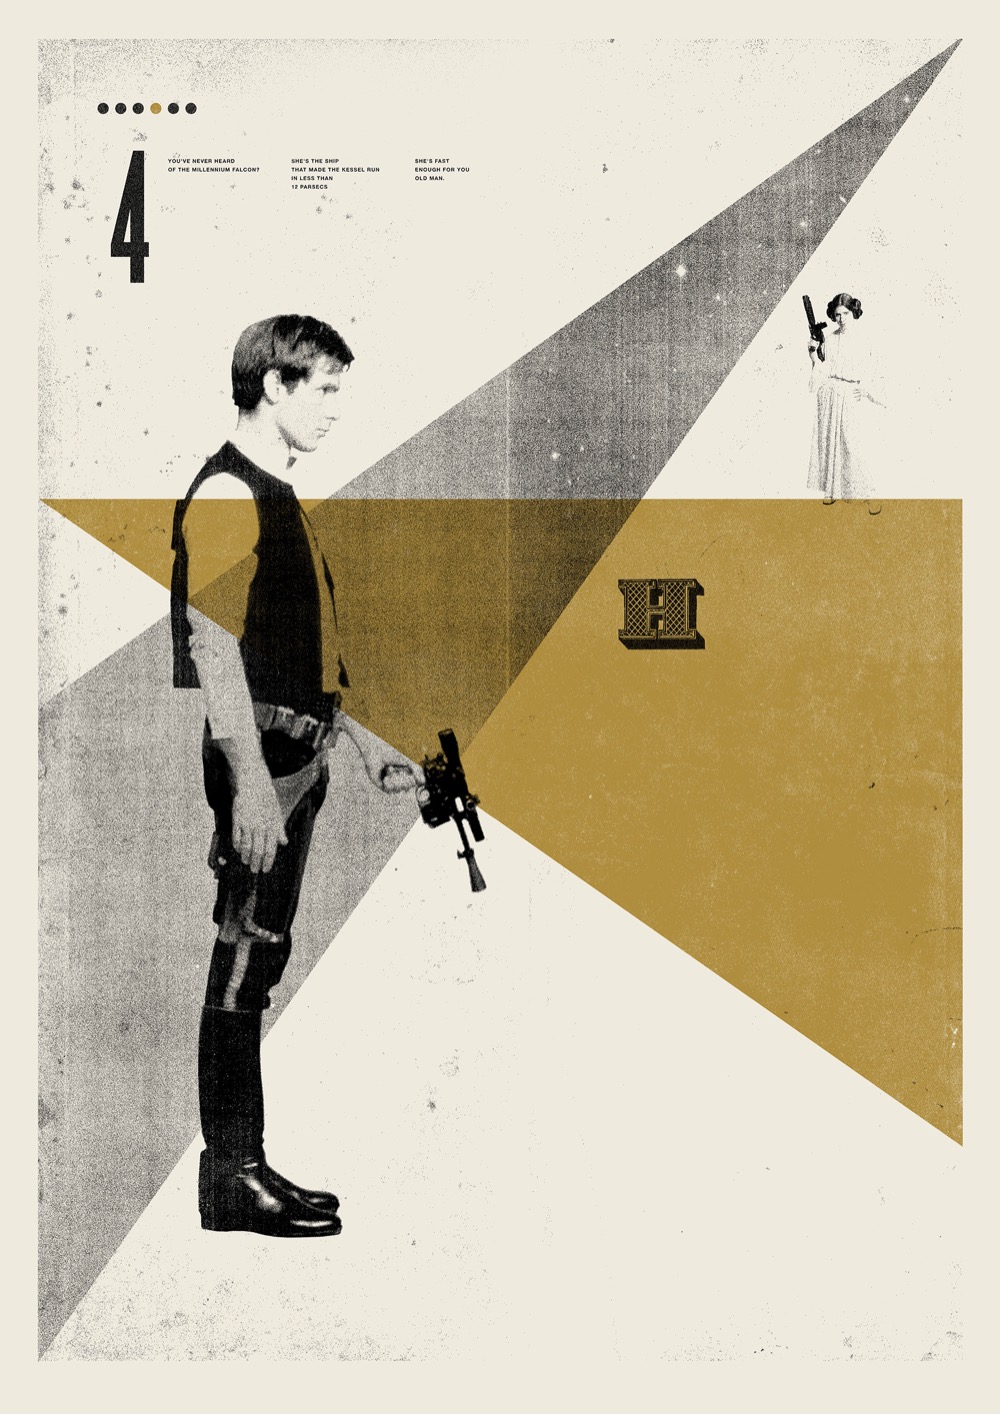 retro modern movie poster for Star Wars